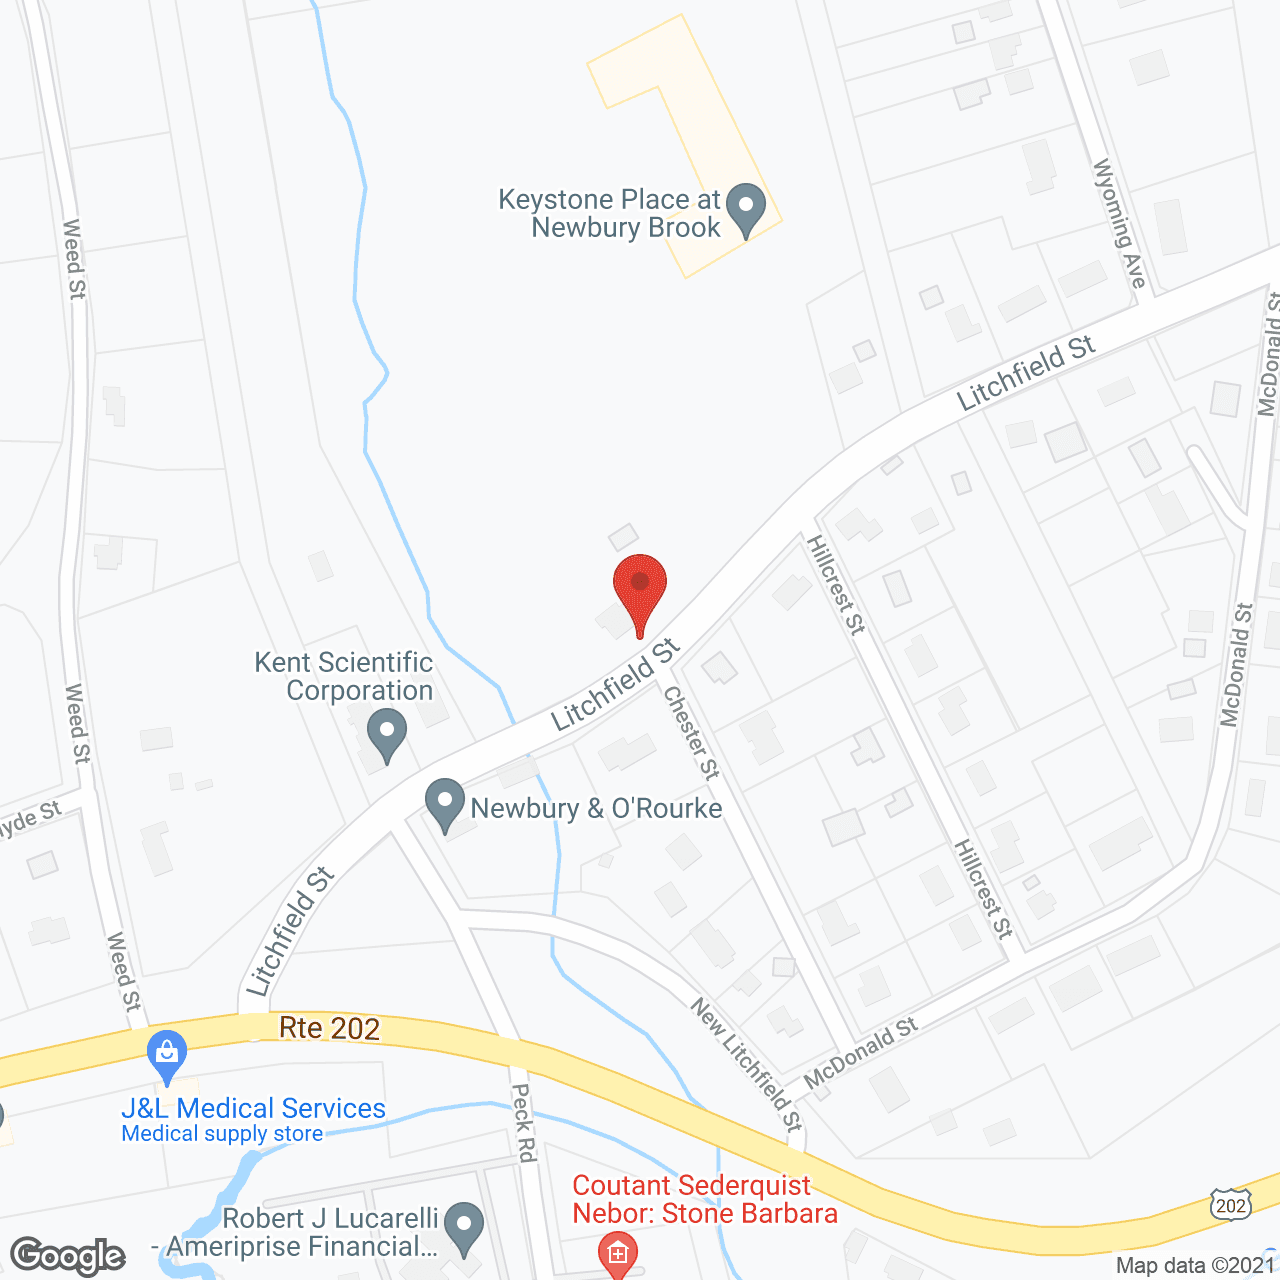 Keystone Place at Newbury Brook in google map